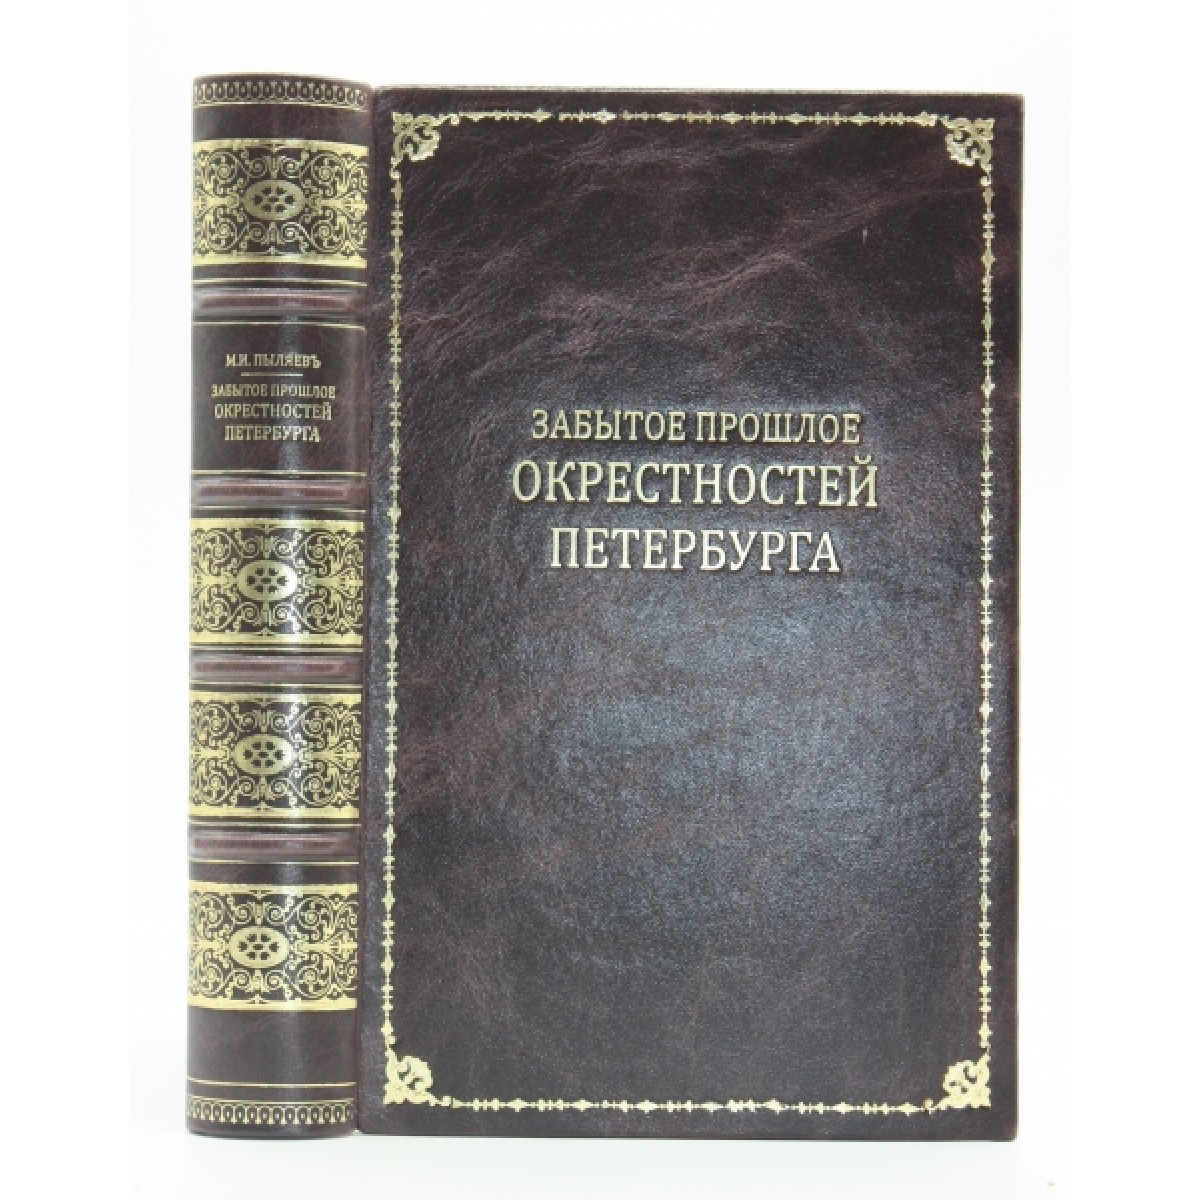 1889 книга